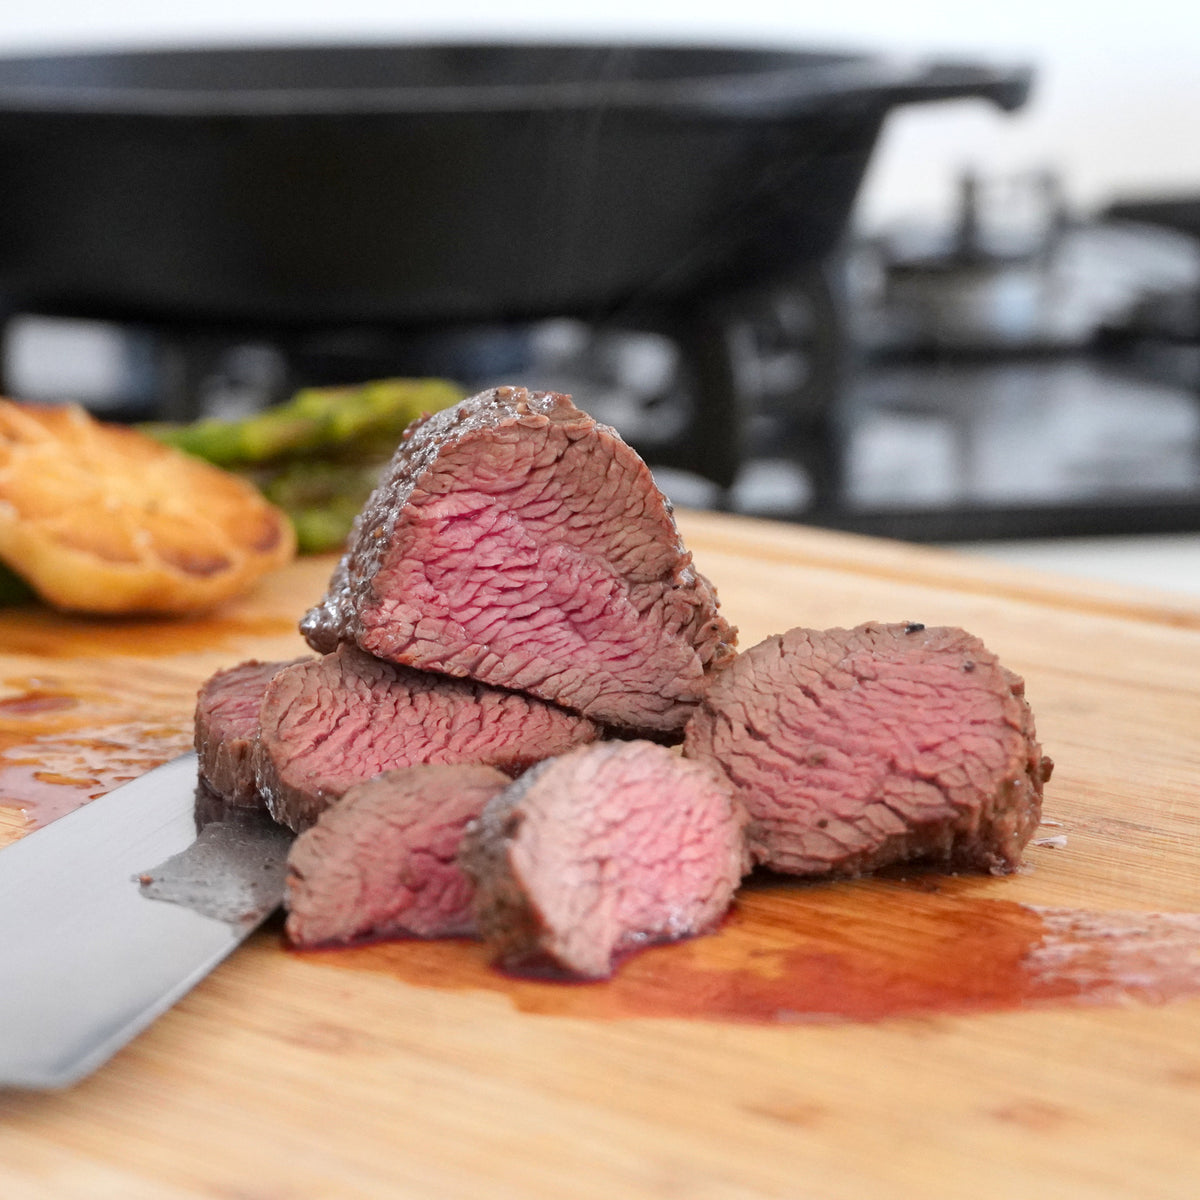 Grass-Fed Beef Teres Major / Petite Tender Steak from New Zealand (200g) - Horizon Farms